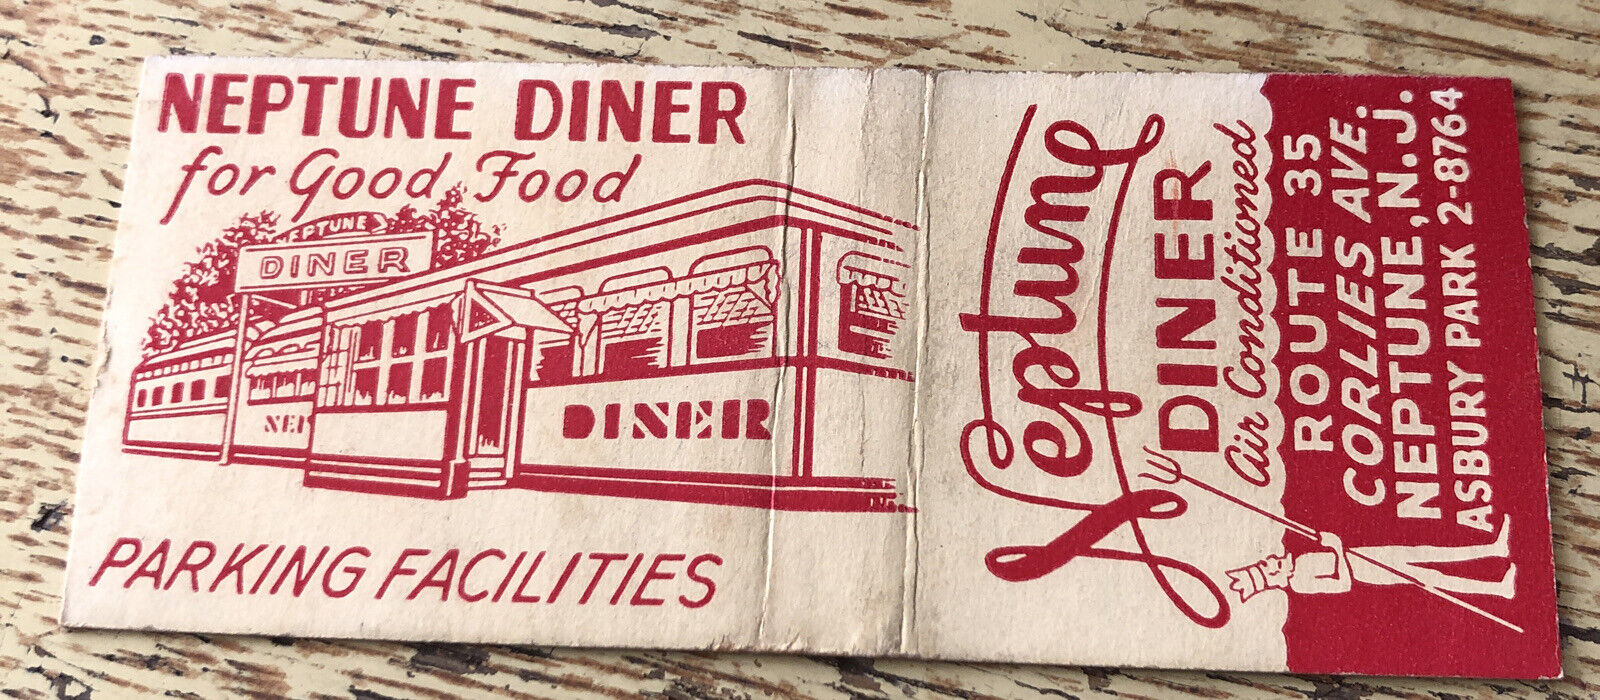 1940s-50s Neptune Diner Restaurant New Jersey Matchbook Cover 